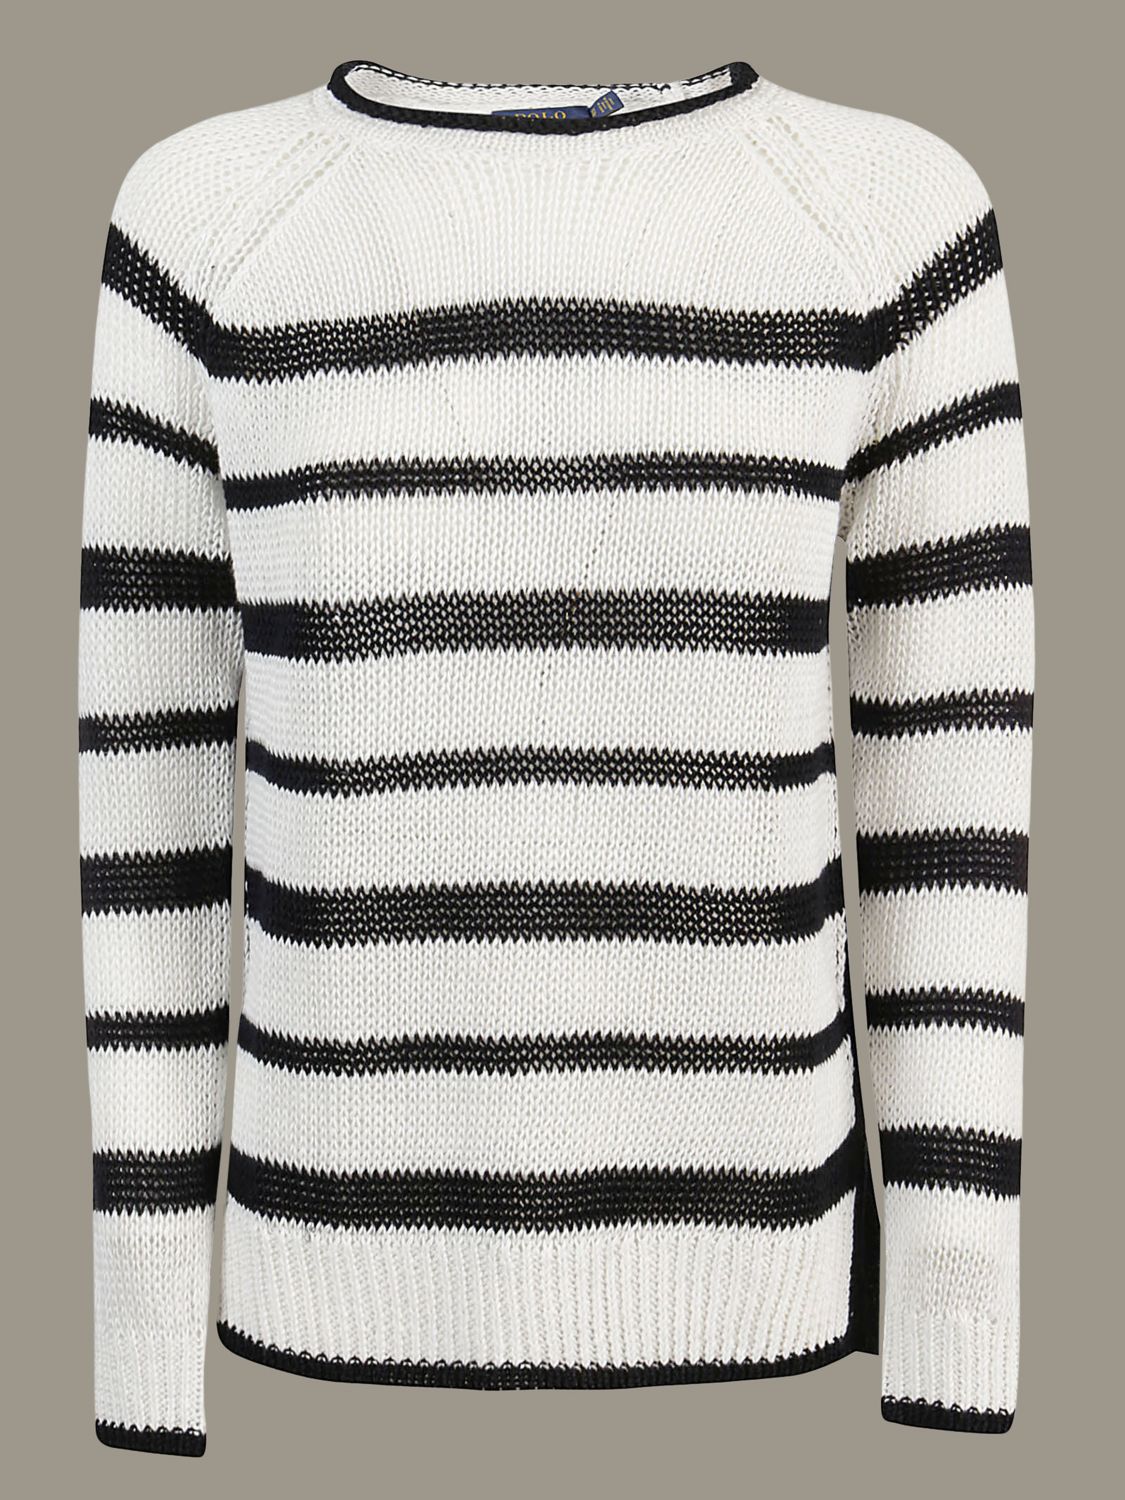 ralph lauren black and white sweater